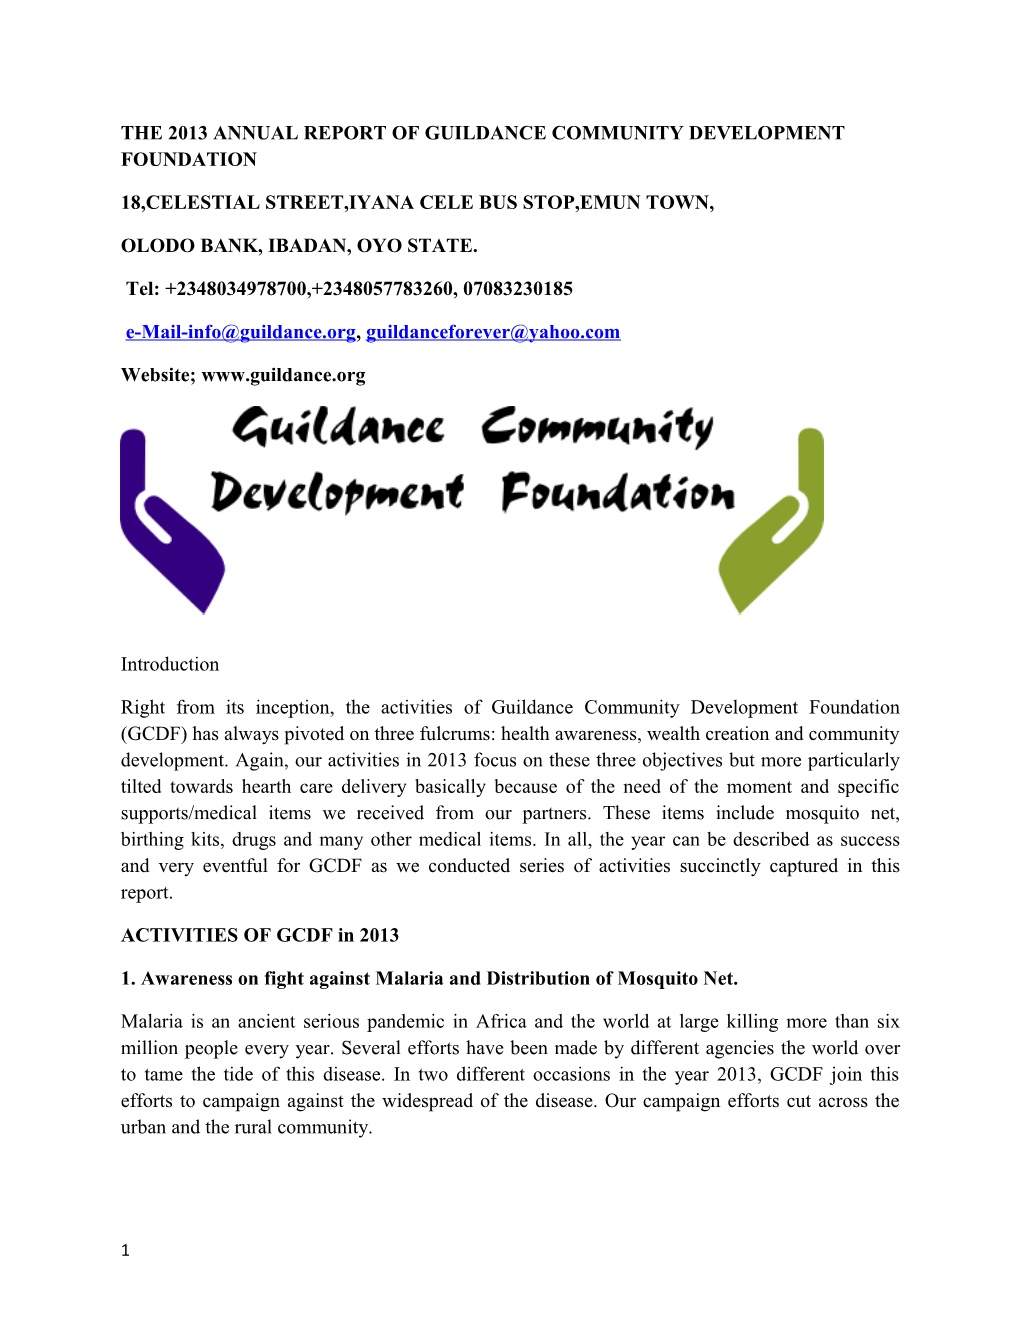 The 2013 Annual Report of Guildance Community Development Foundation